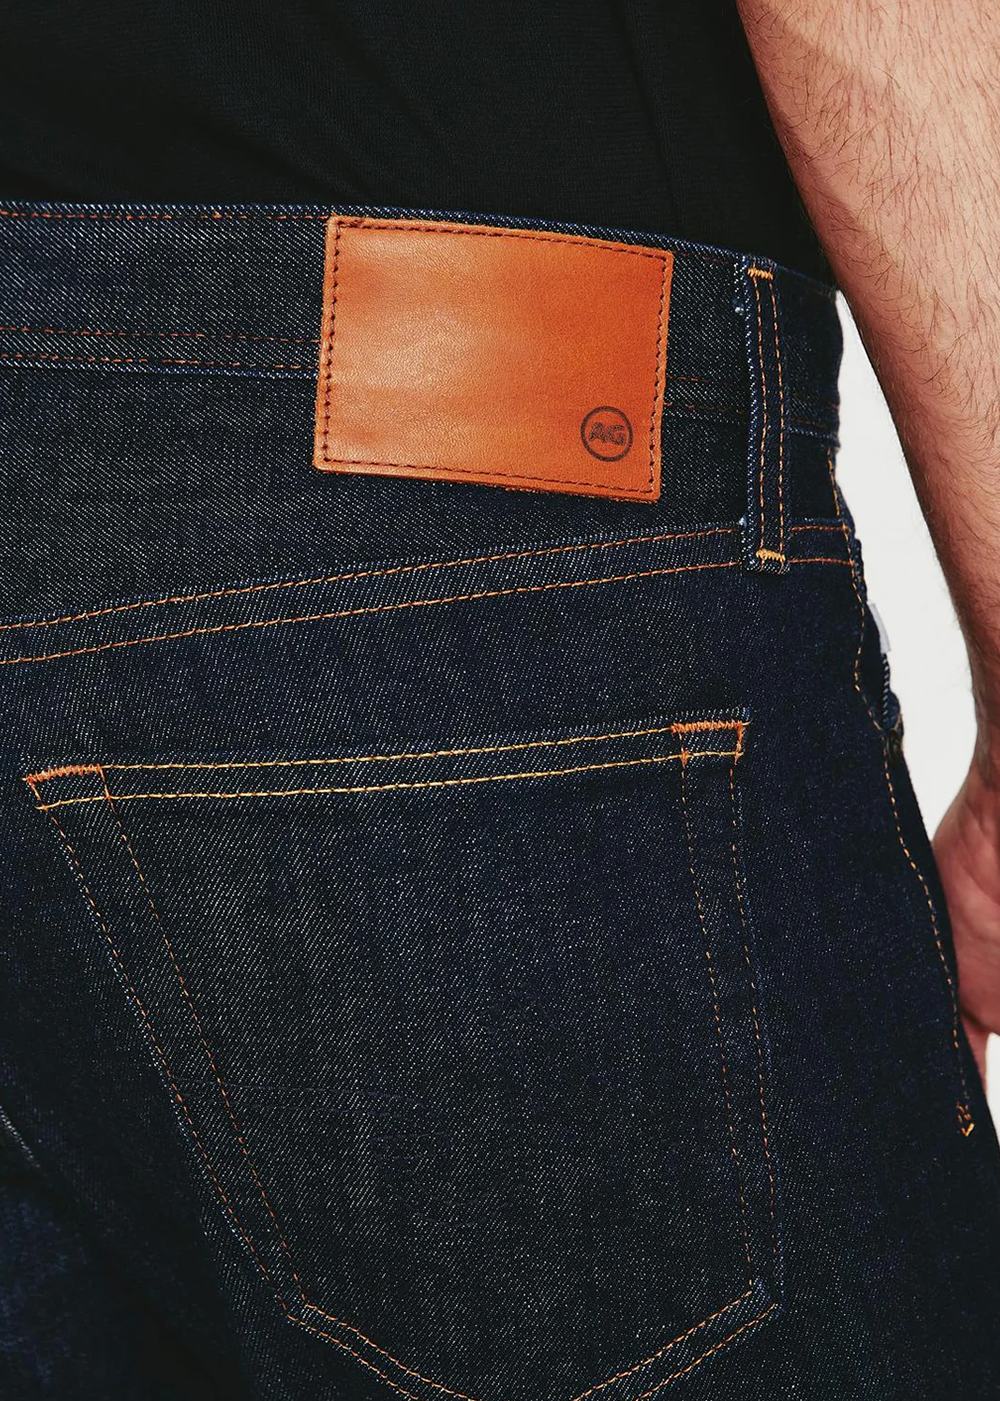 Everett Slim Straight Jean - Crucial - AG Jeans Canada - Danali